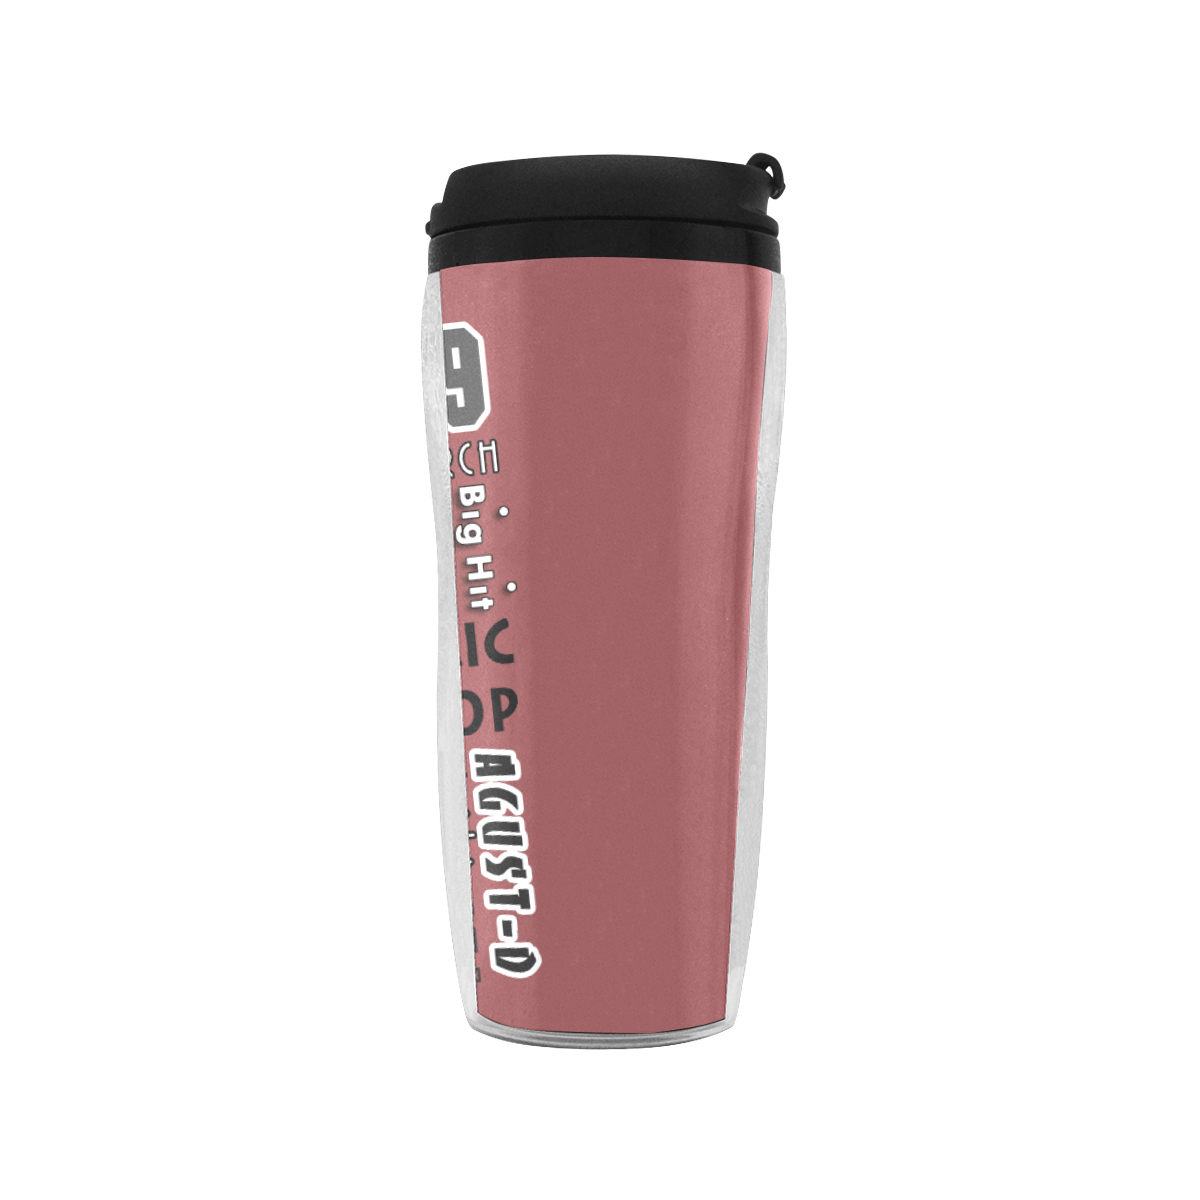 SUGA BTS - Mic drop chibi Reusable Coffee Cup (11.8oz)